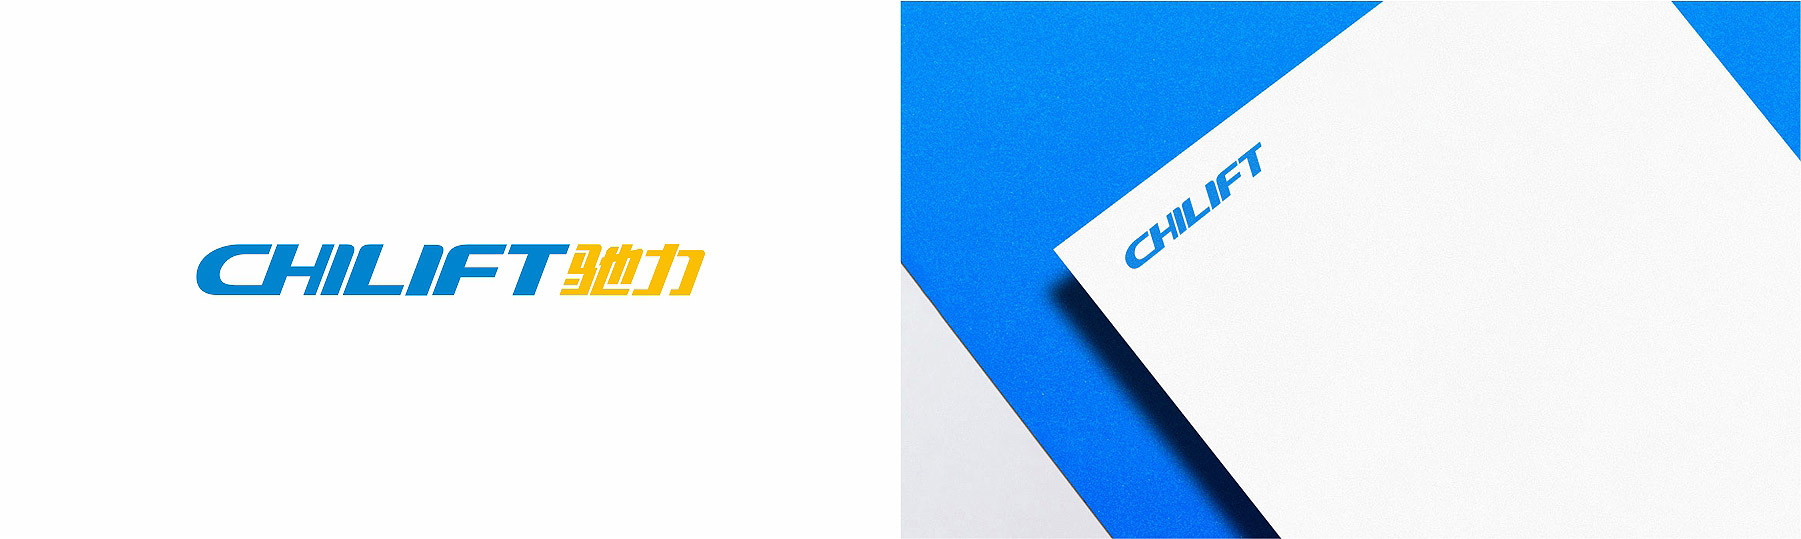 CHILIFT 驰力品牌升级改造名片设计